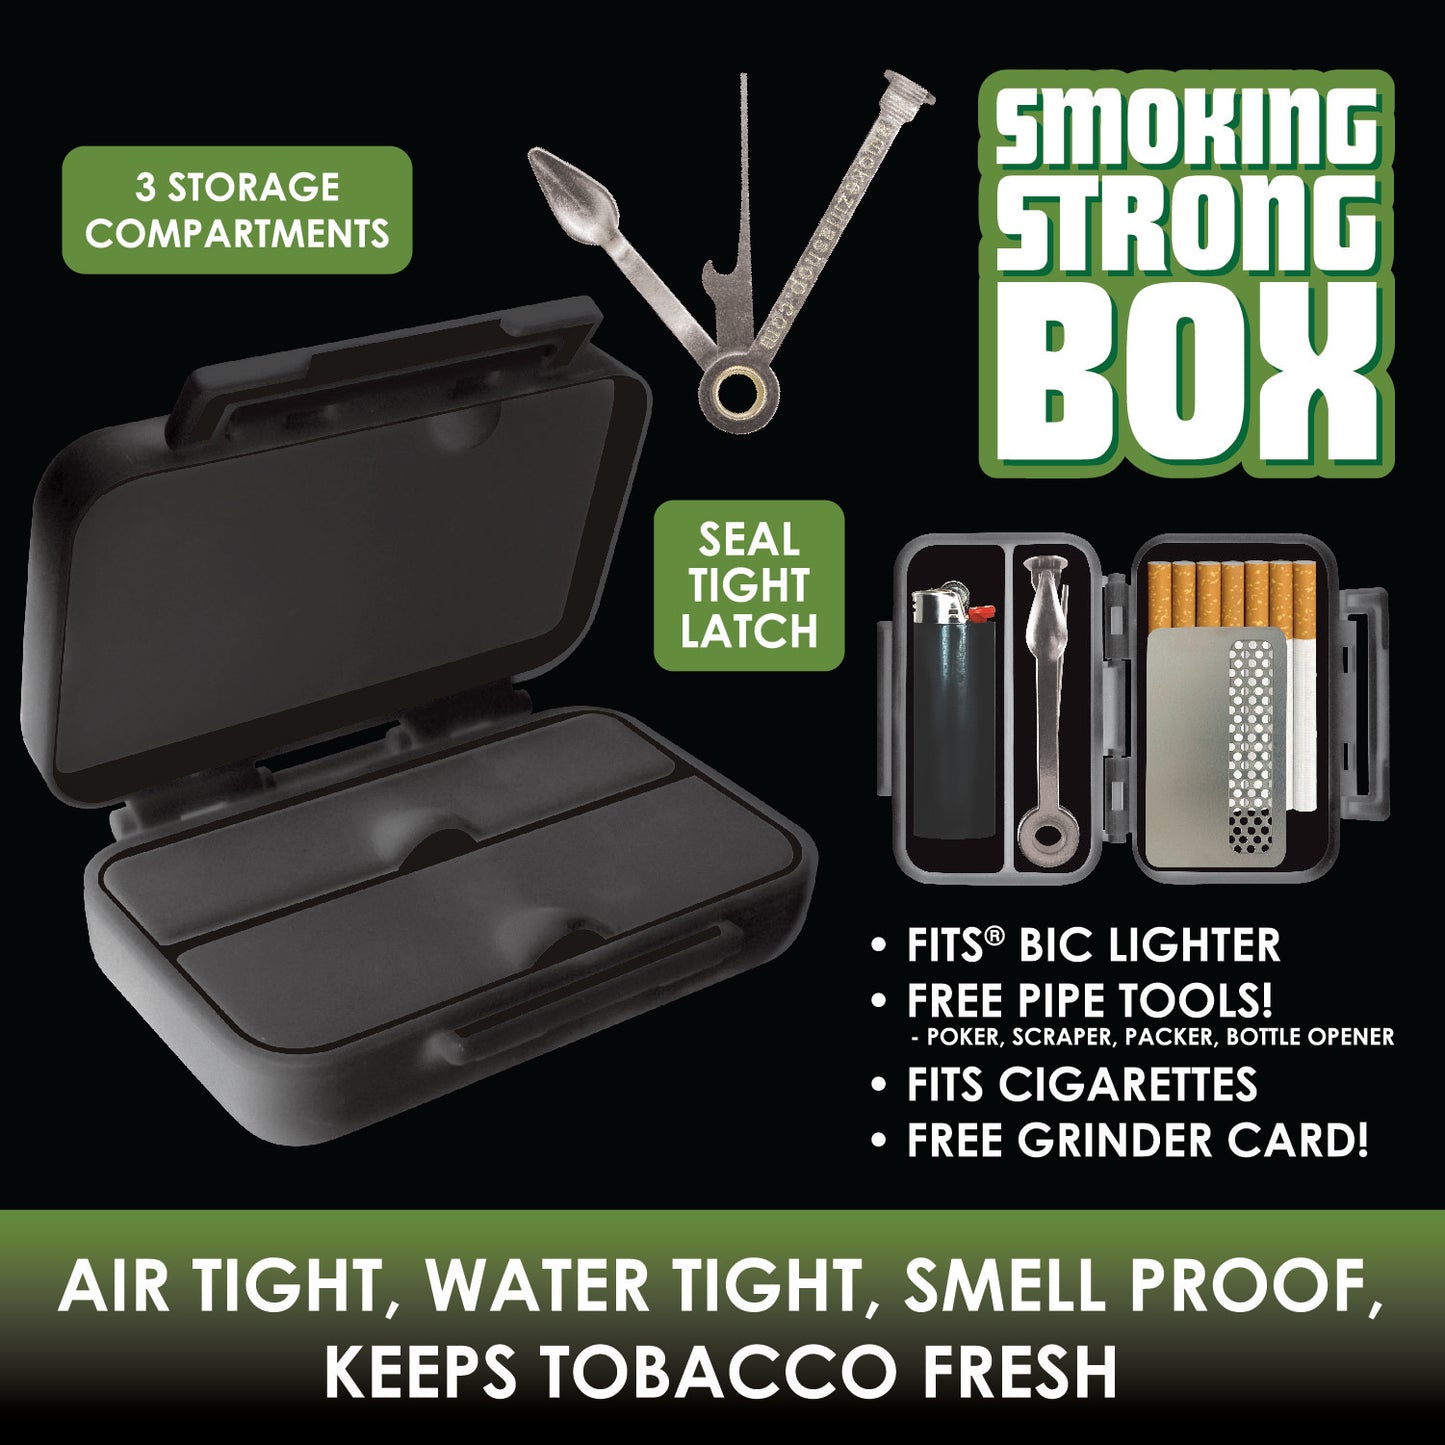 ITEM NUMBER 022924 SMOKING STRONG BOX 8 PIECES PER DISPLAY